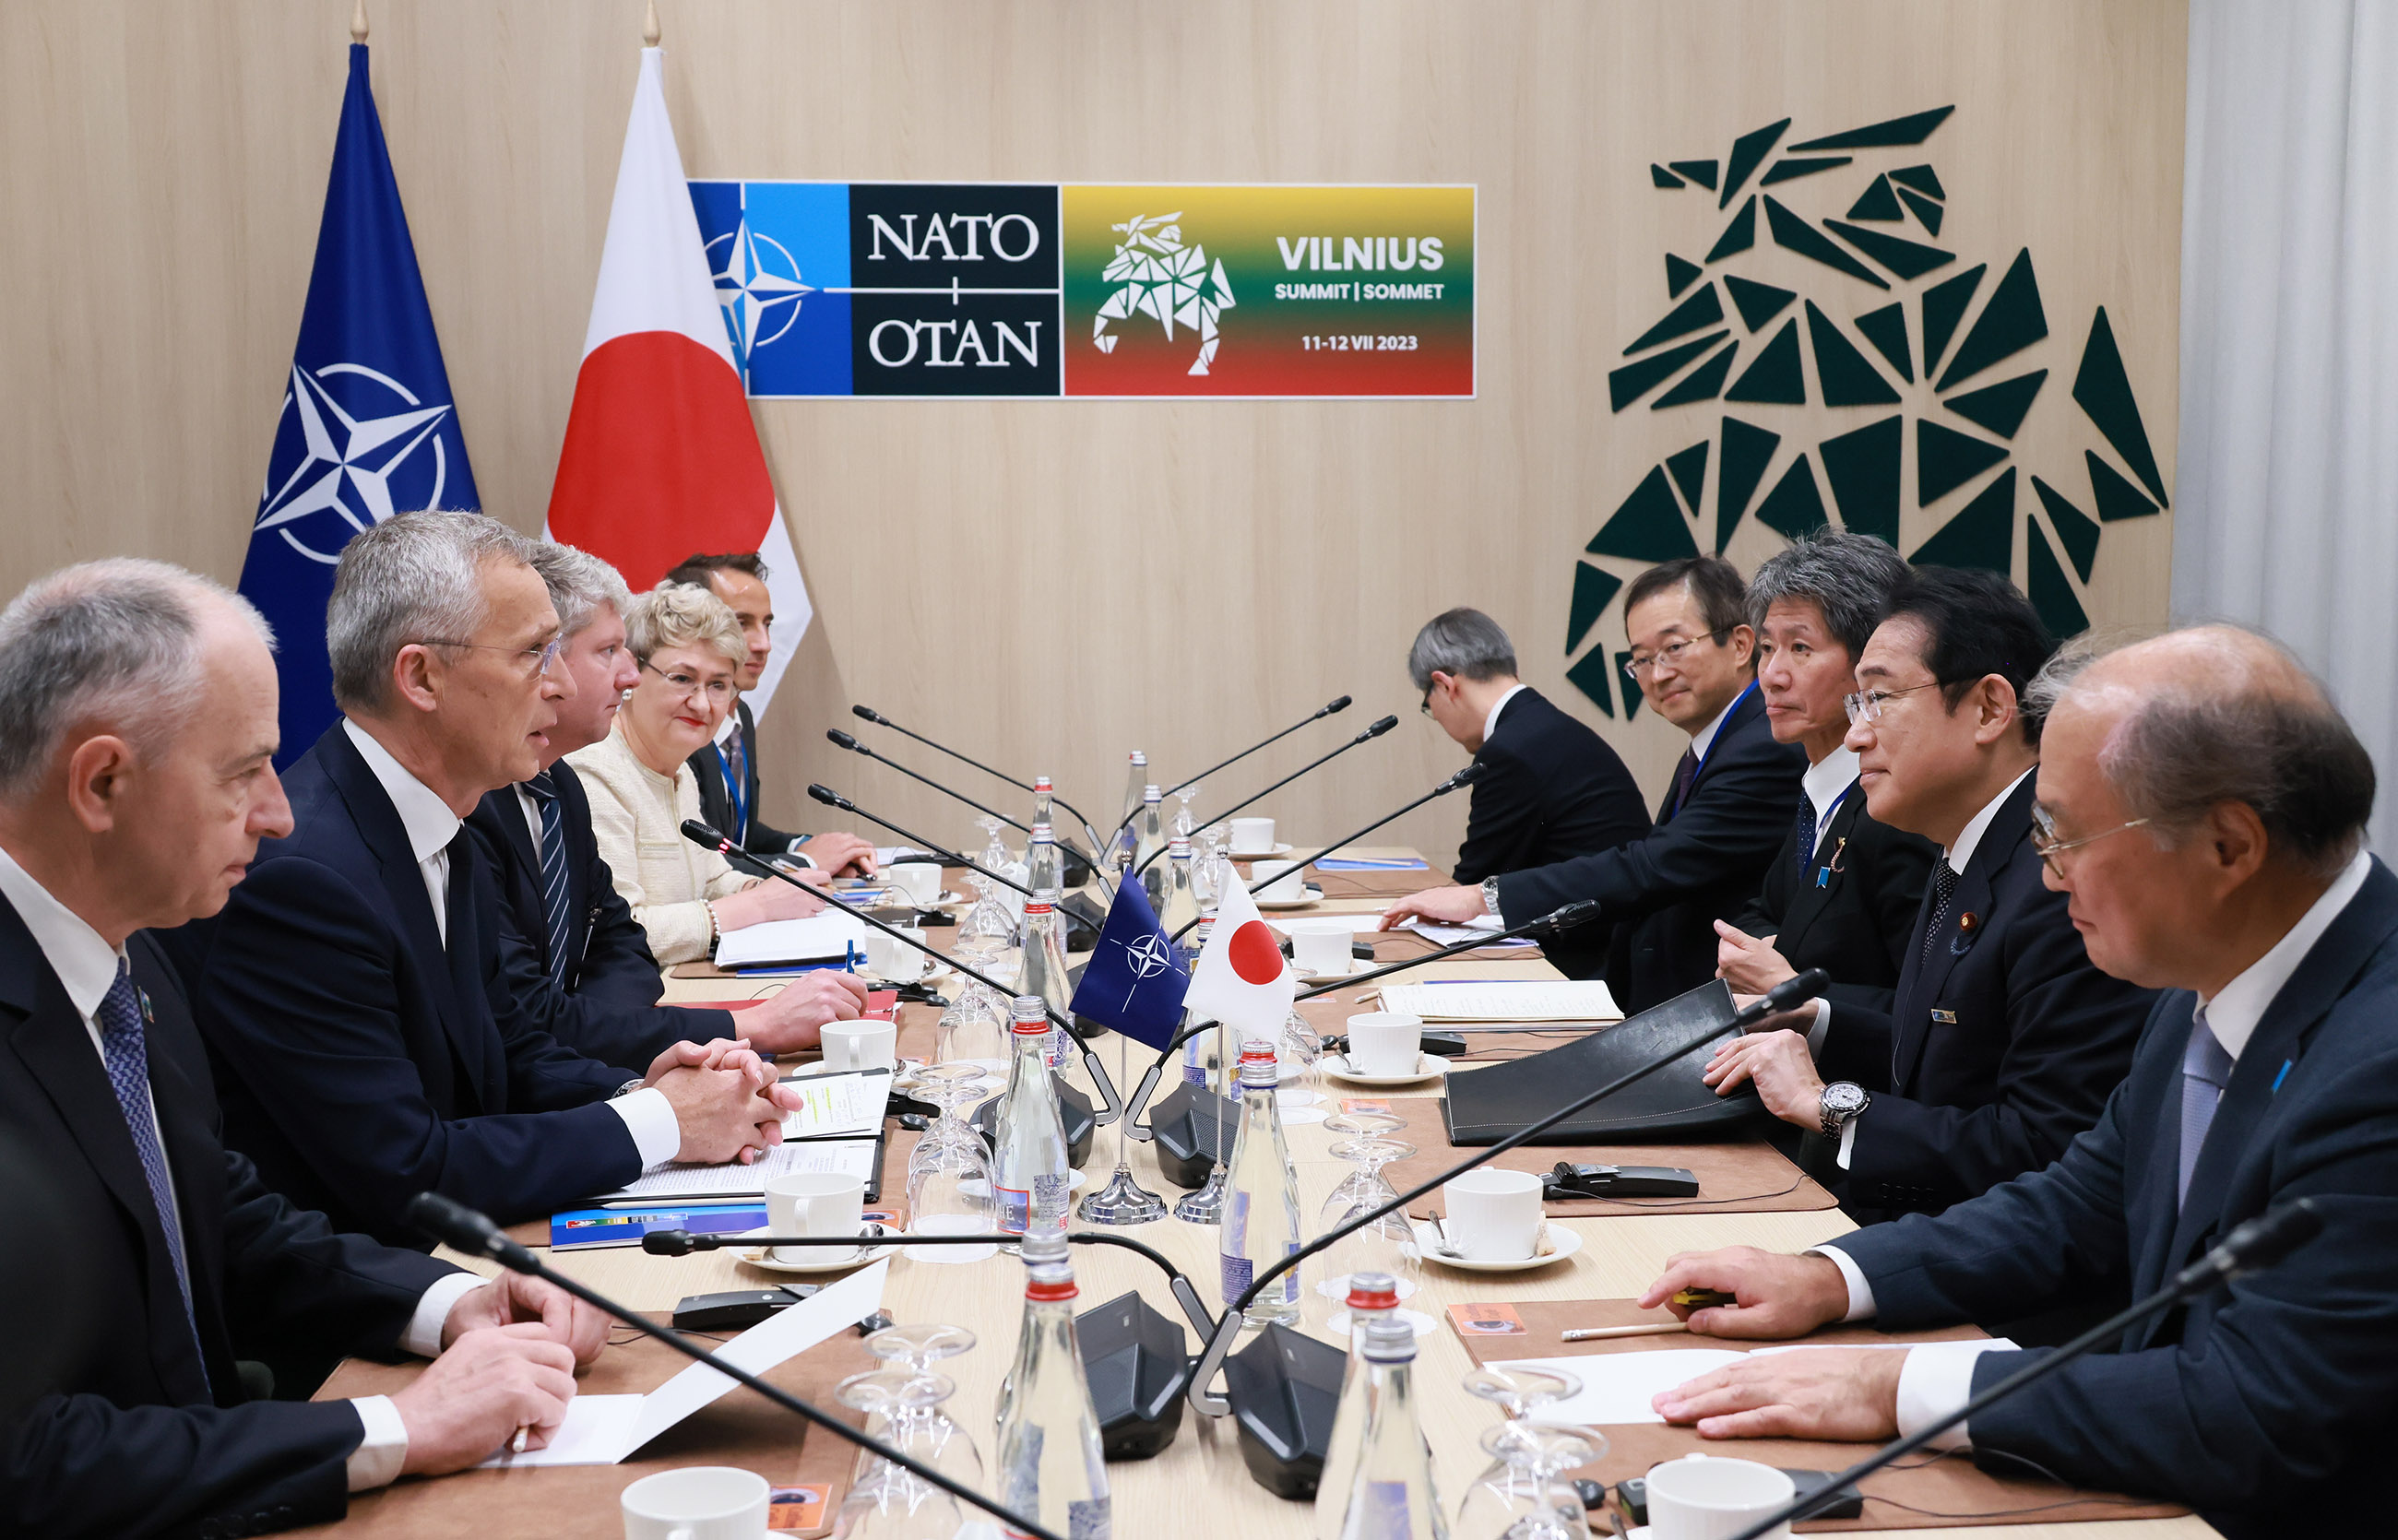 Prime Minister Kishida holding a meeting with NATO Secretary General Stoltenberg